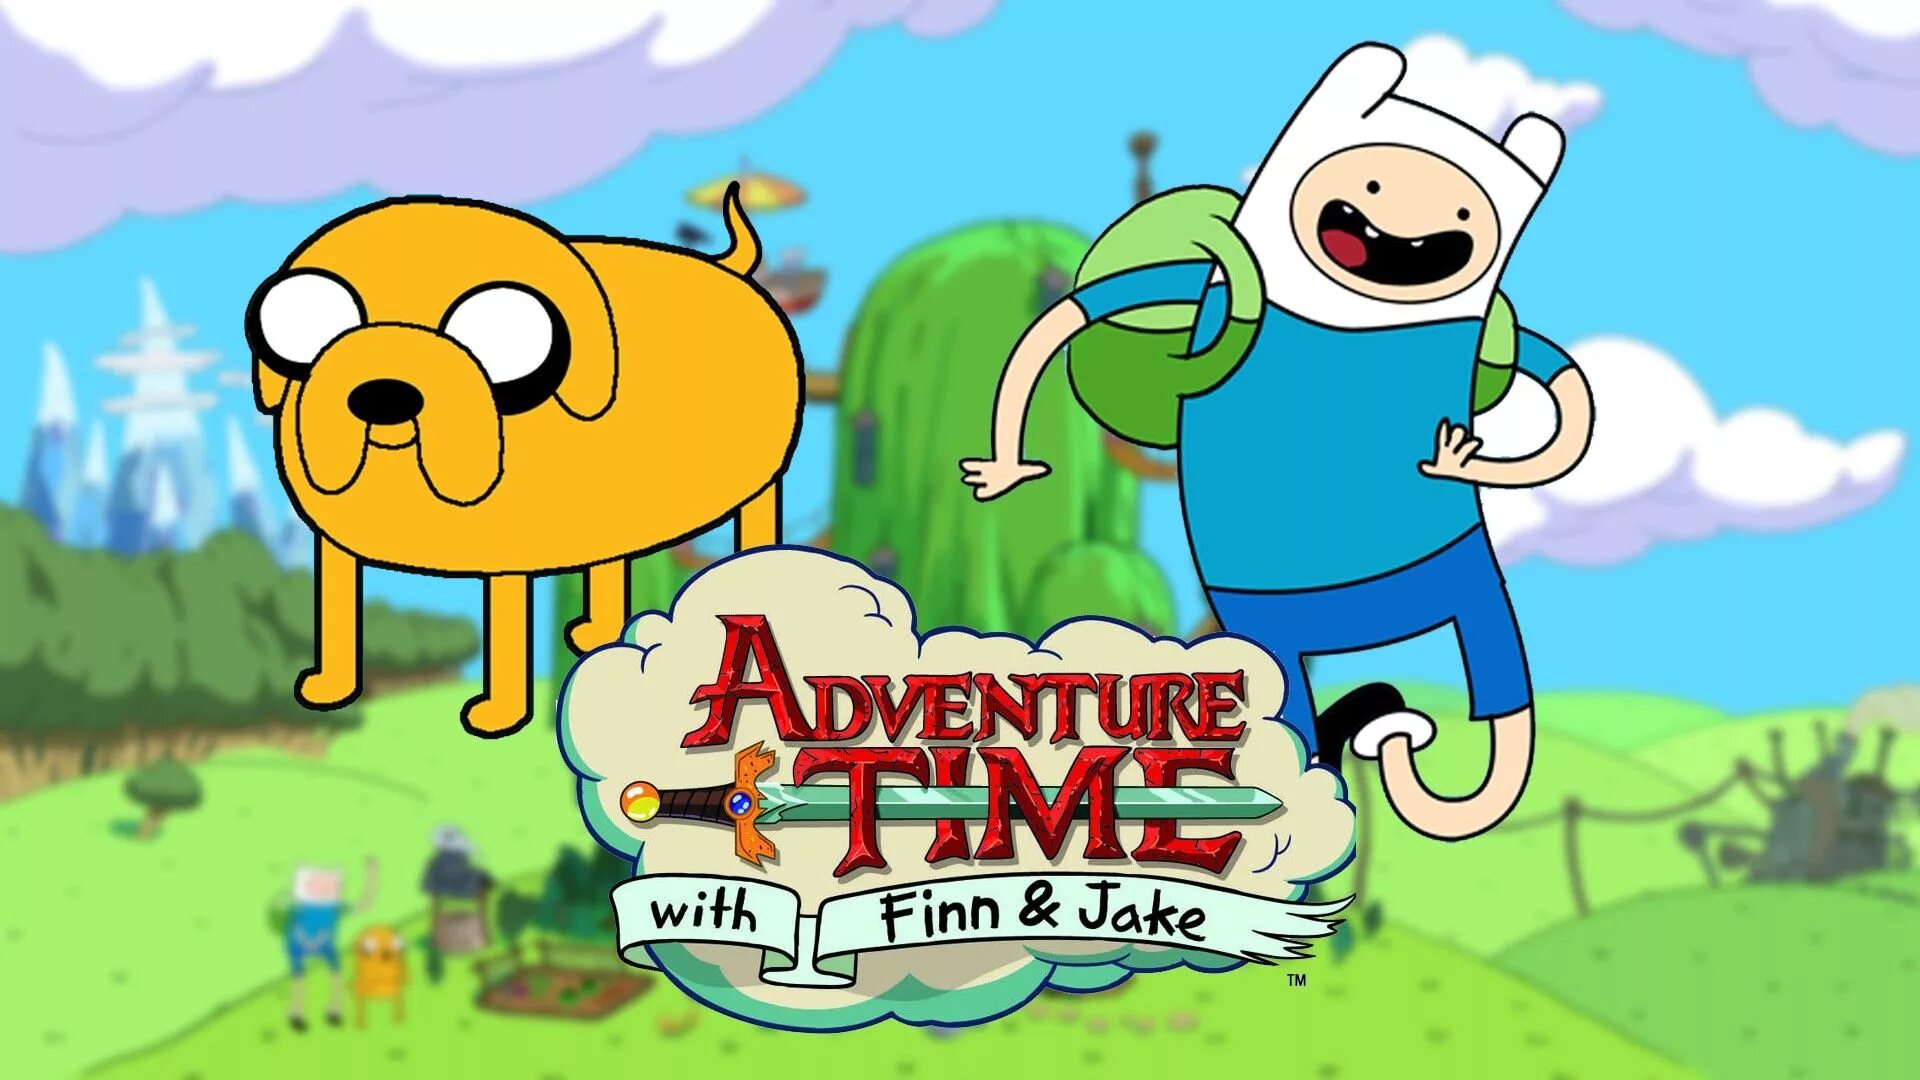 Фин и Джейк. Adventure time Джейк. Финн адвентуре тайм. Финн и Джейк время приключений. Автор времени приключений